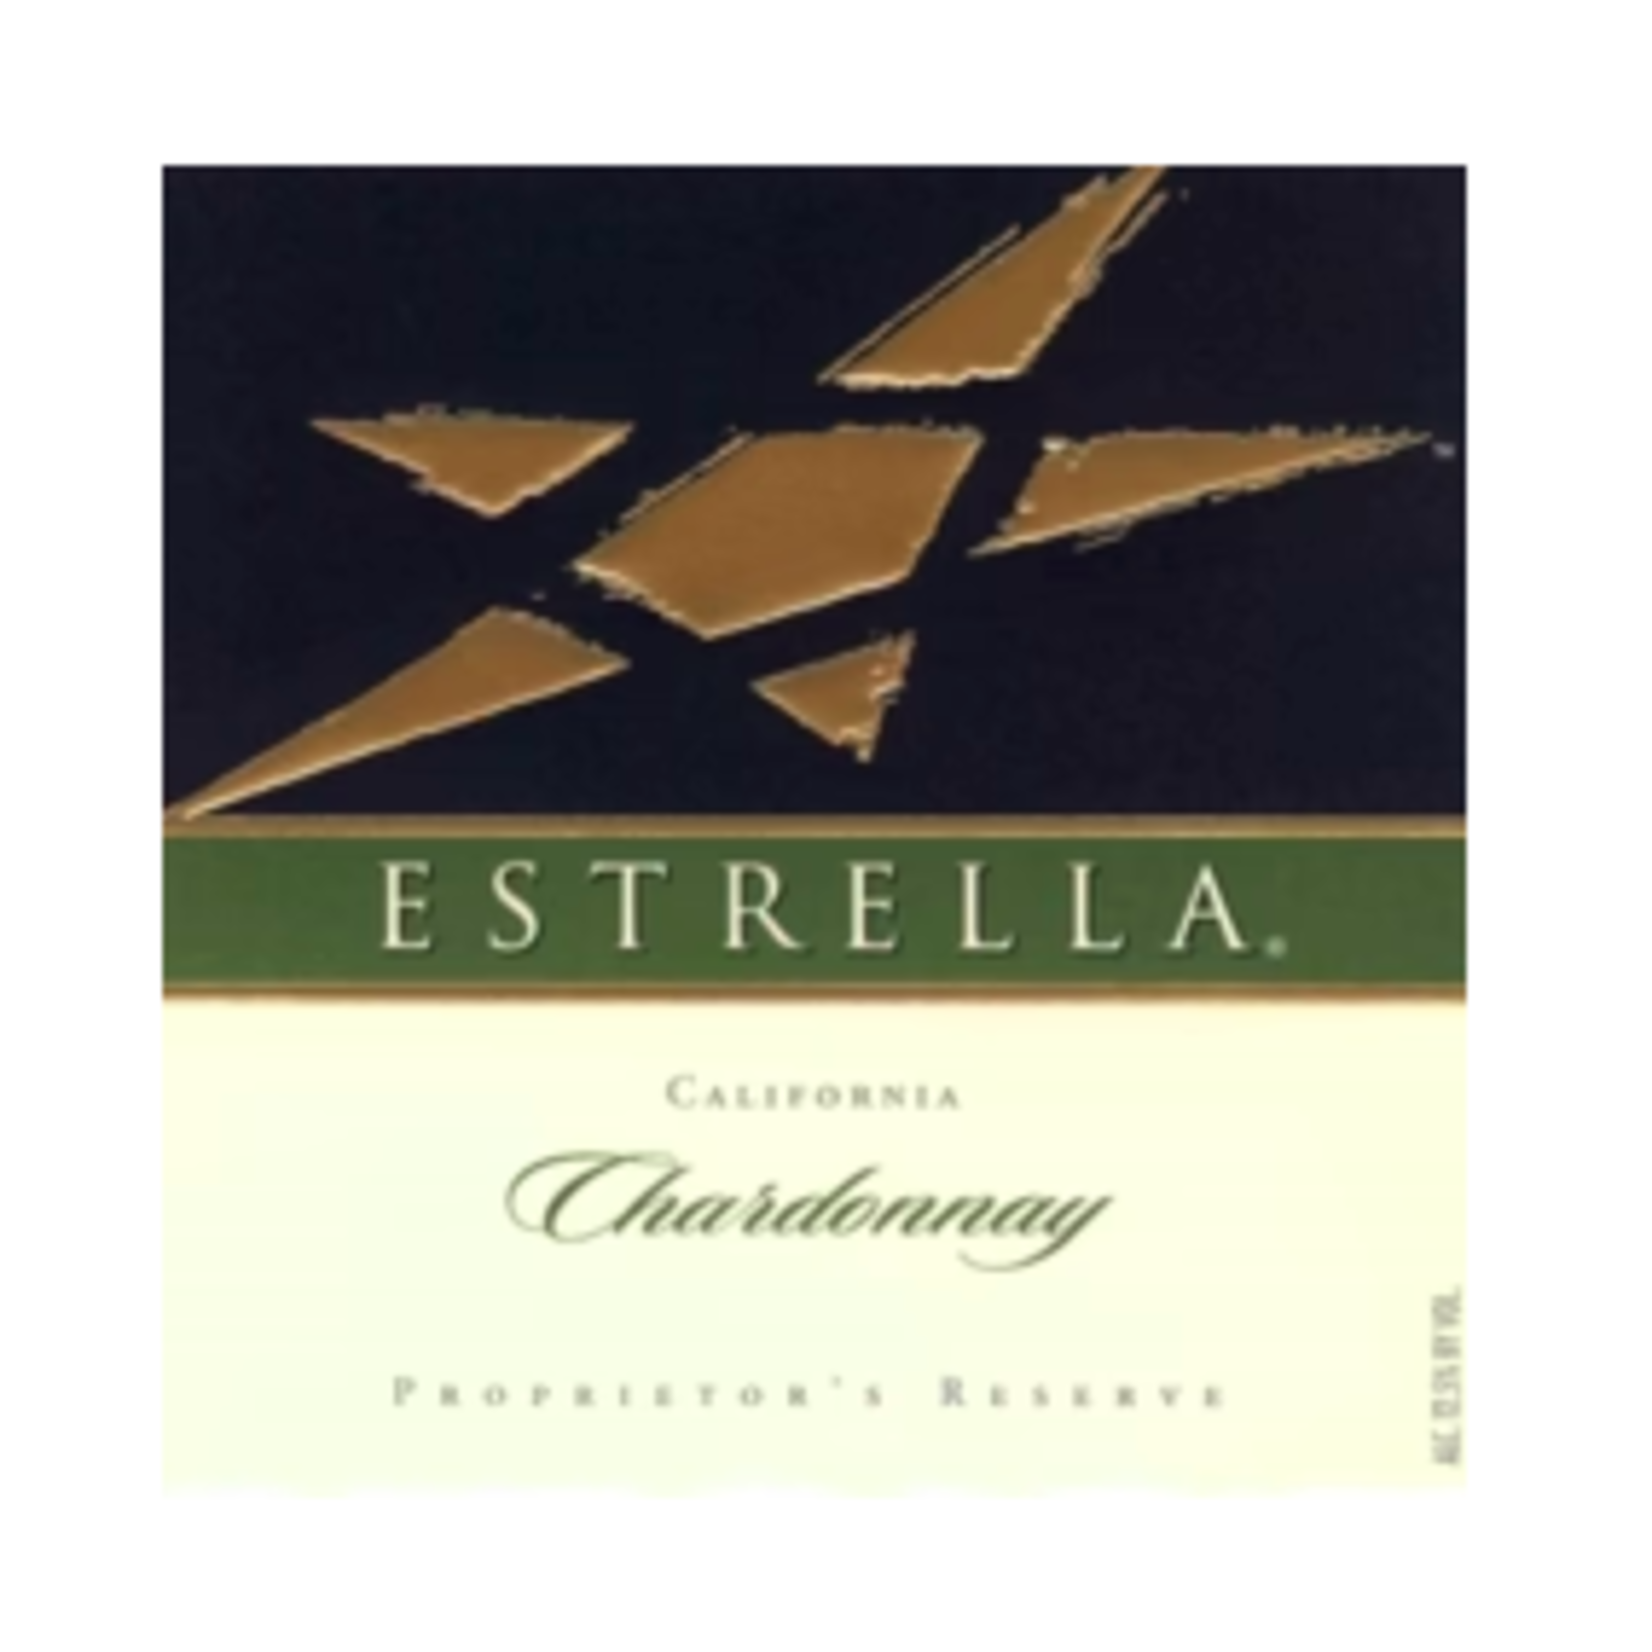 Estrella River, Chardonnay